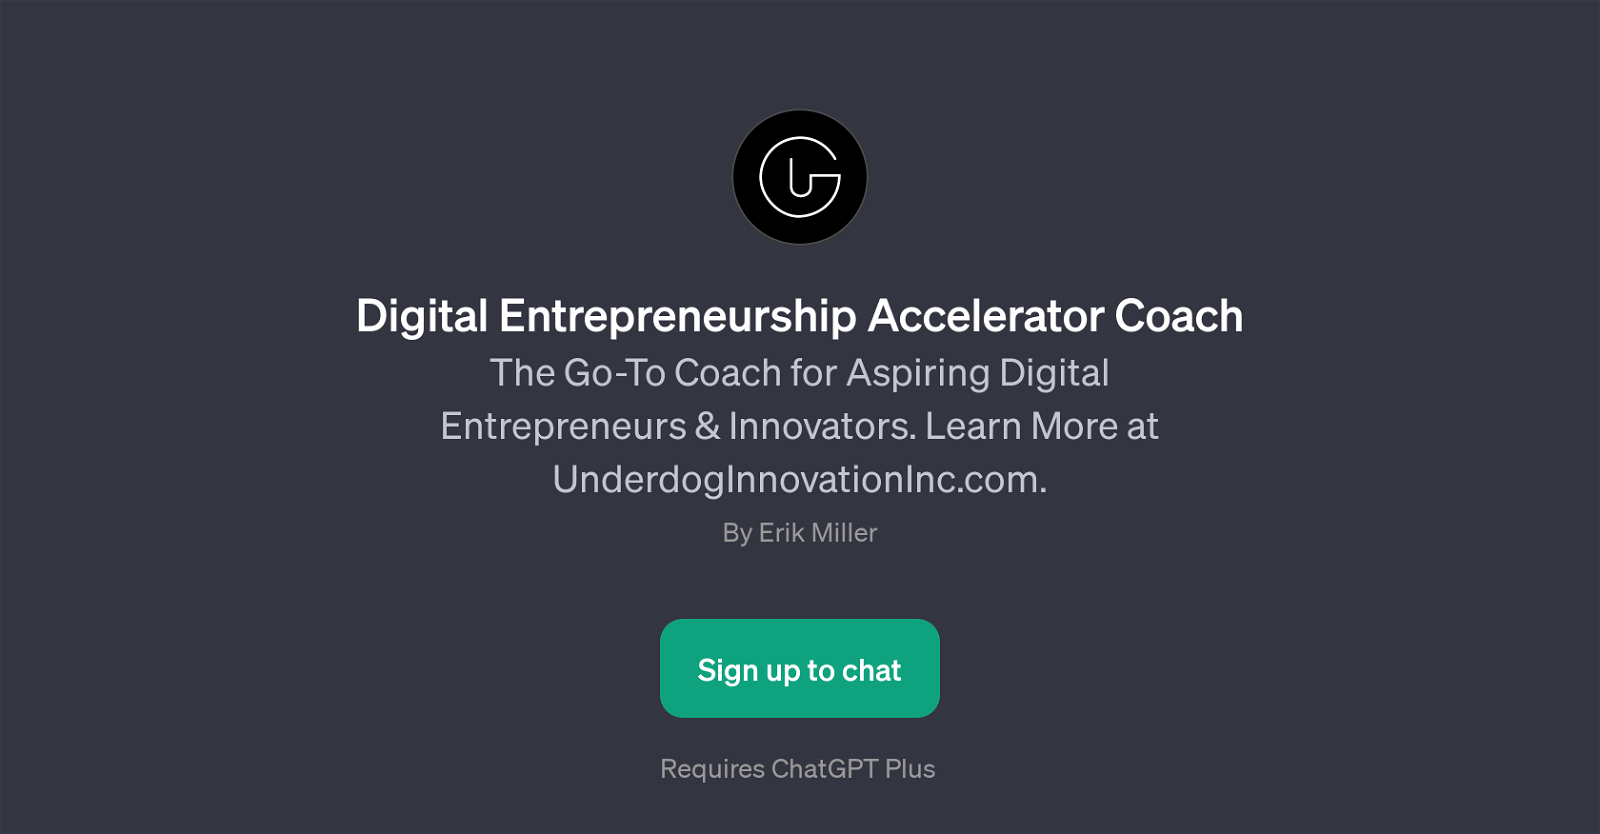 Digital Entrepreneurship Accelerator Coach website